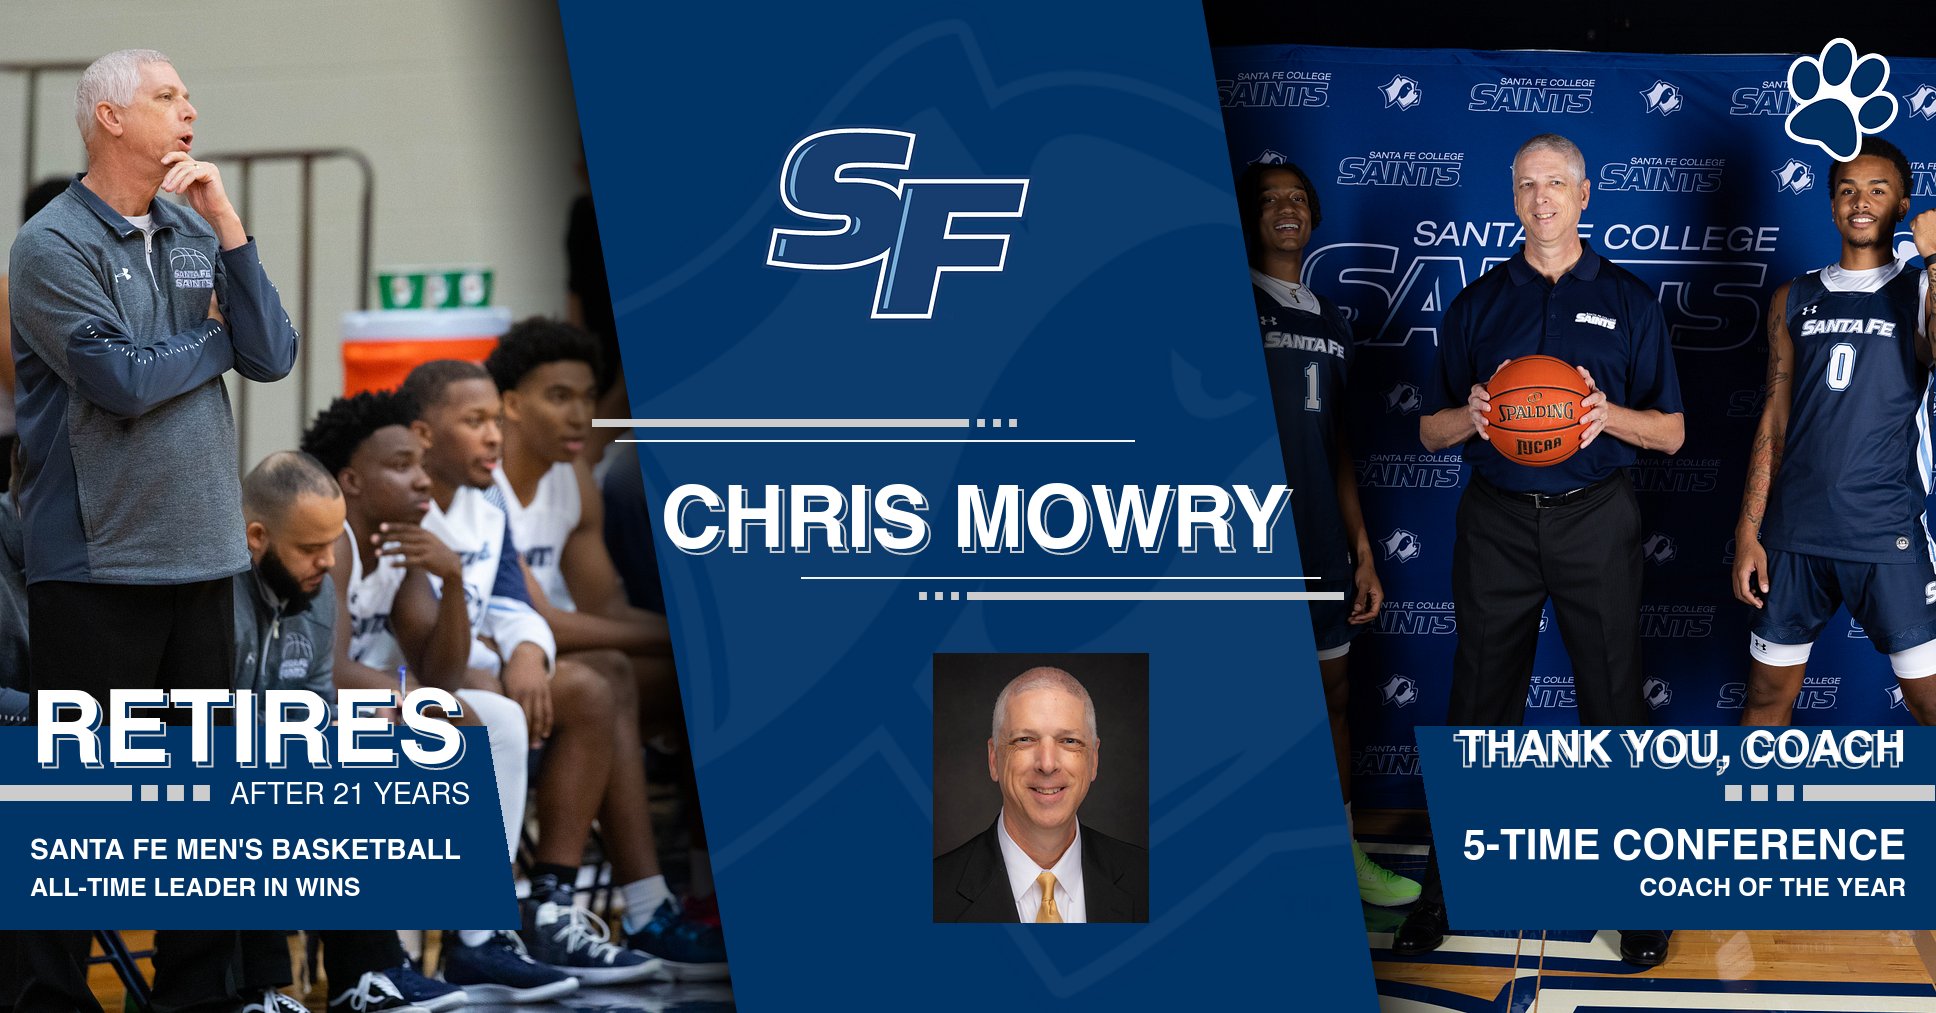 Long-time Coach Chris Mowry Retiring